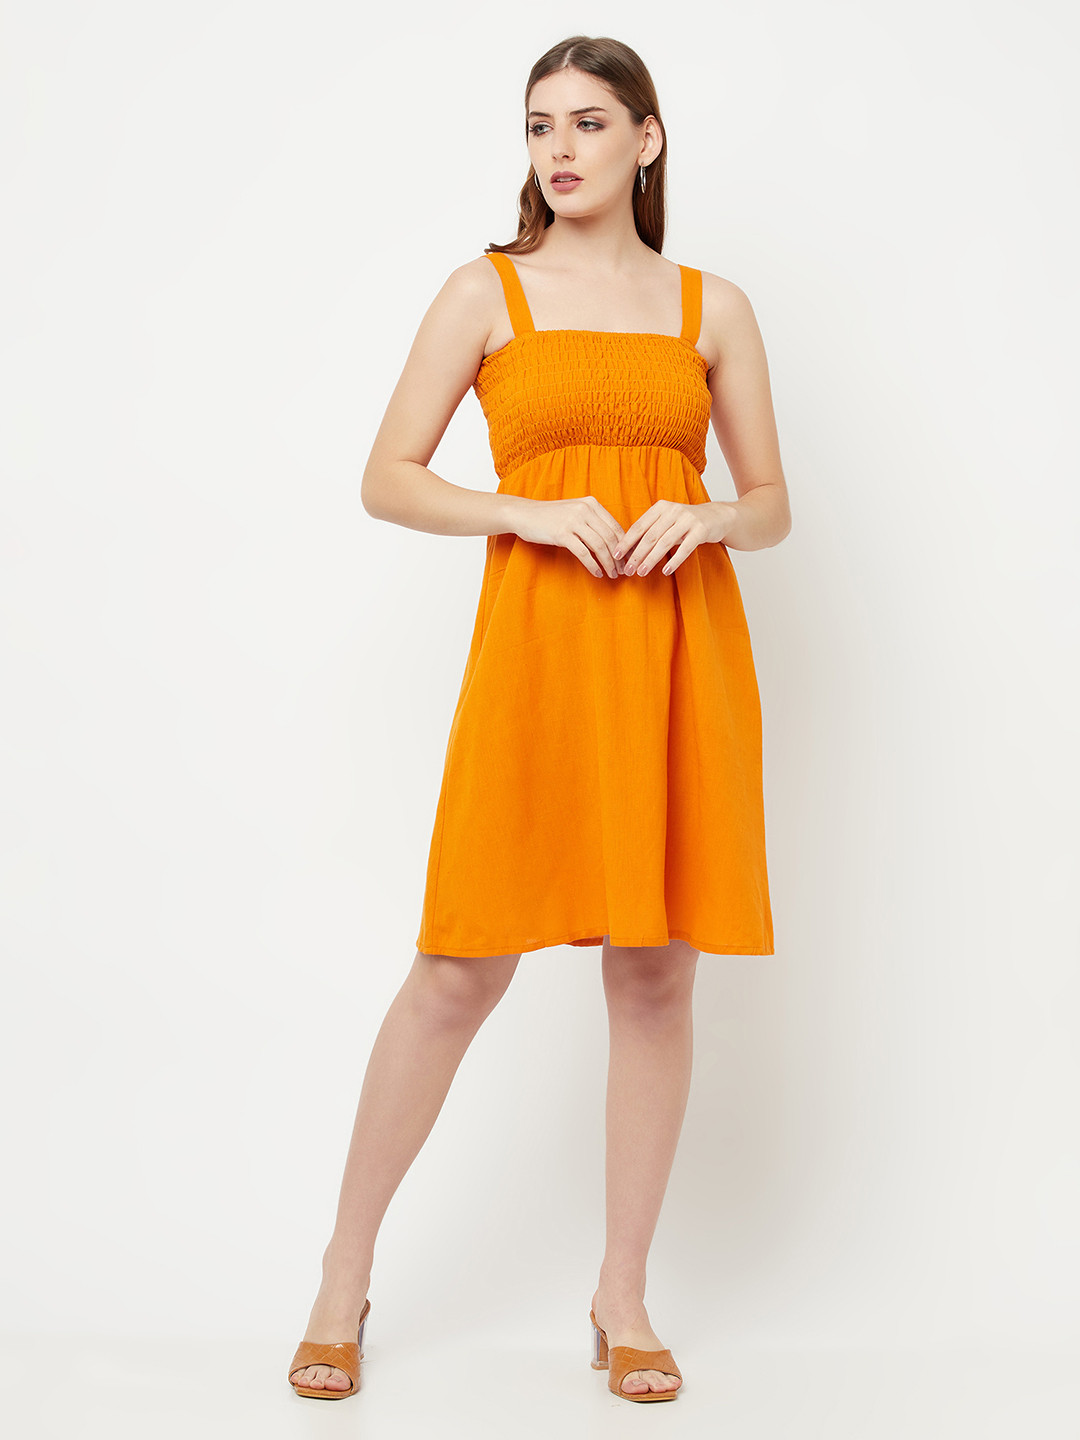 Cotton smocked Orange dress